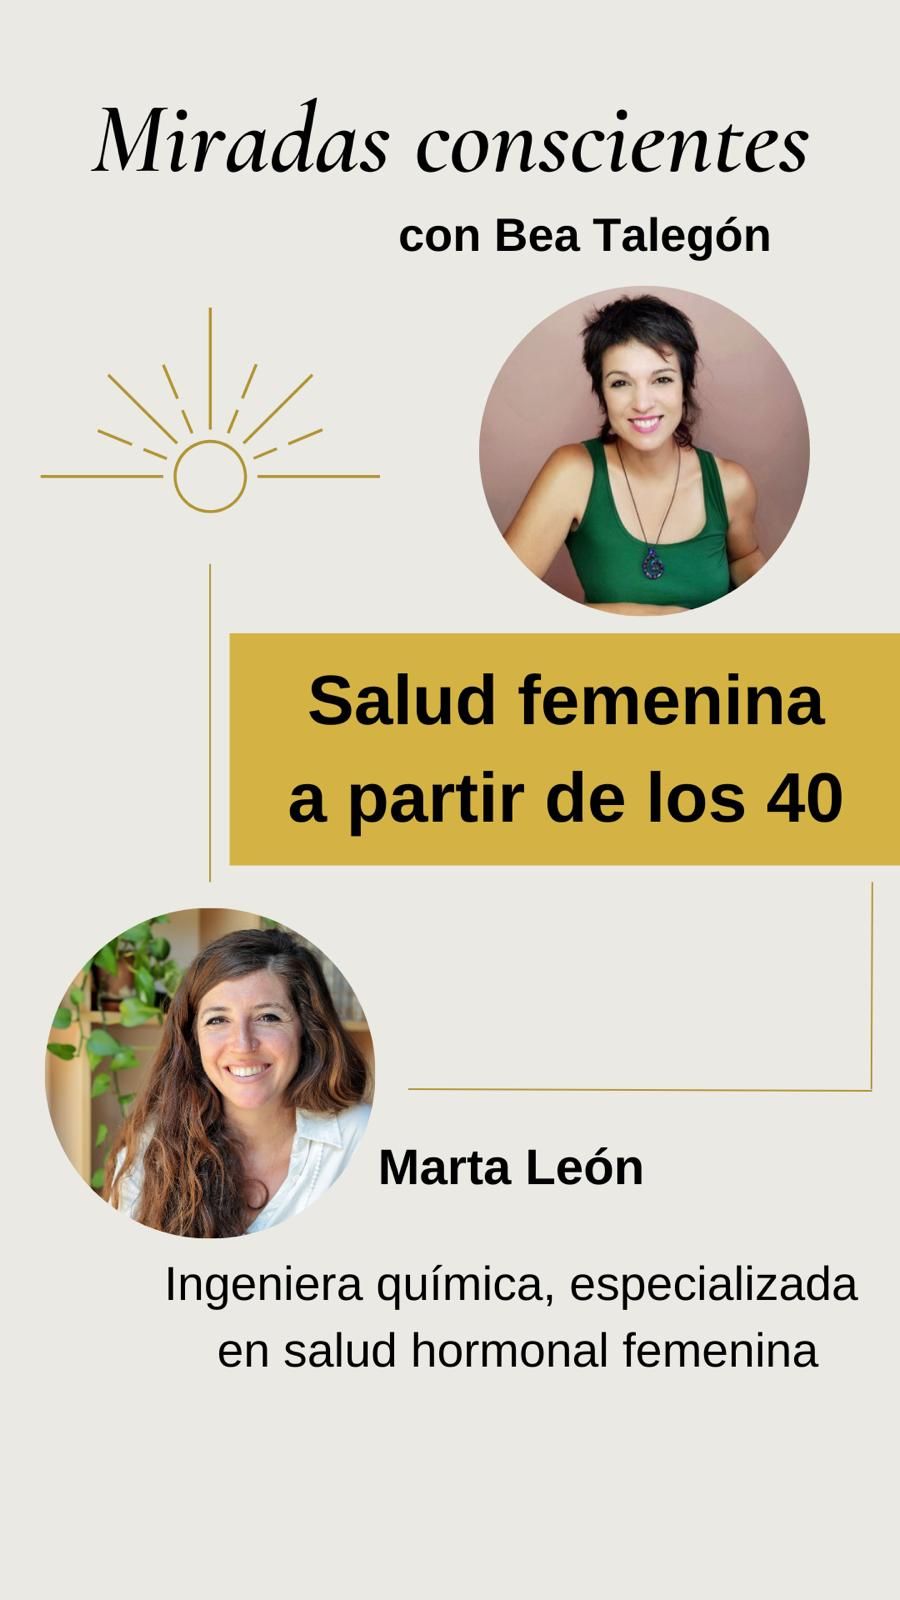 Marta Leon